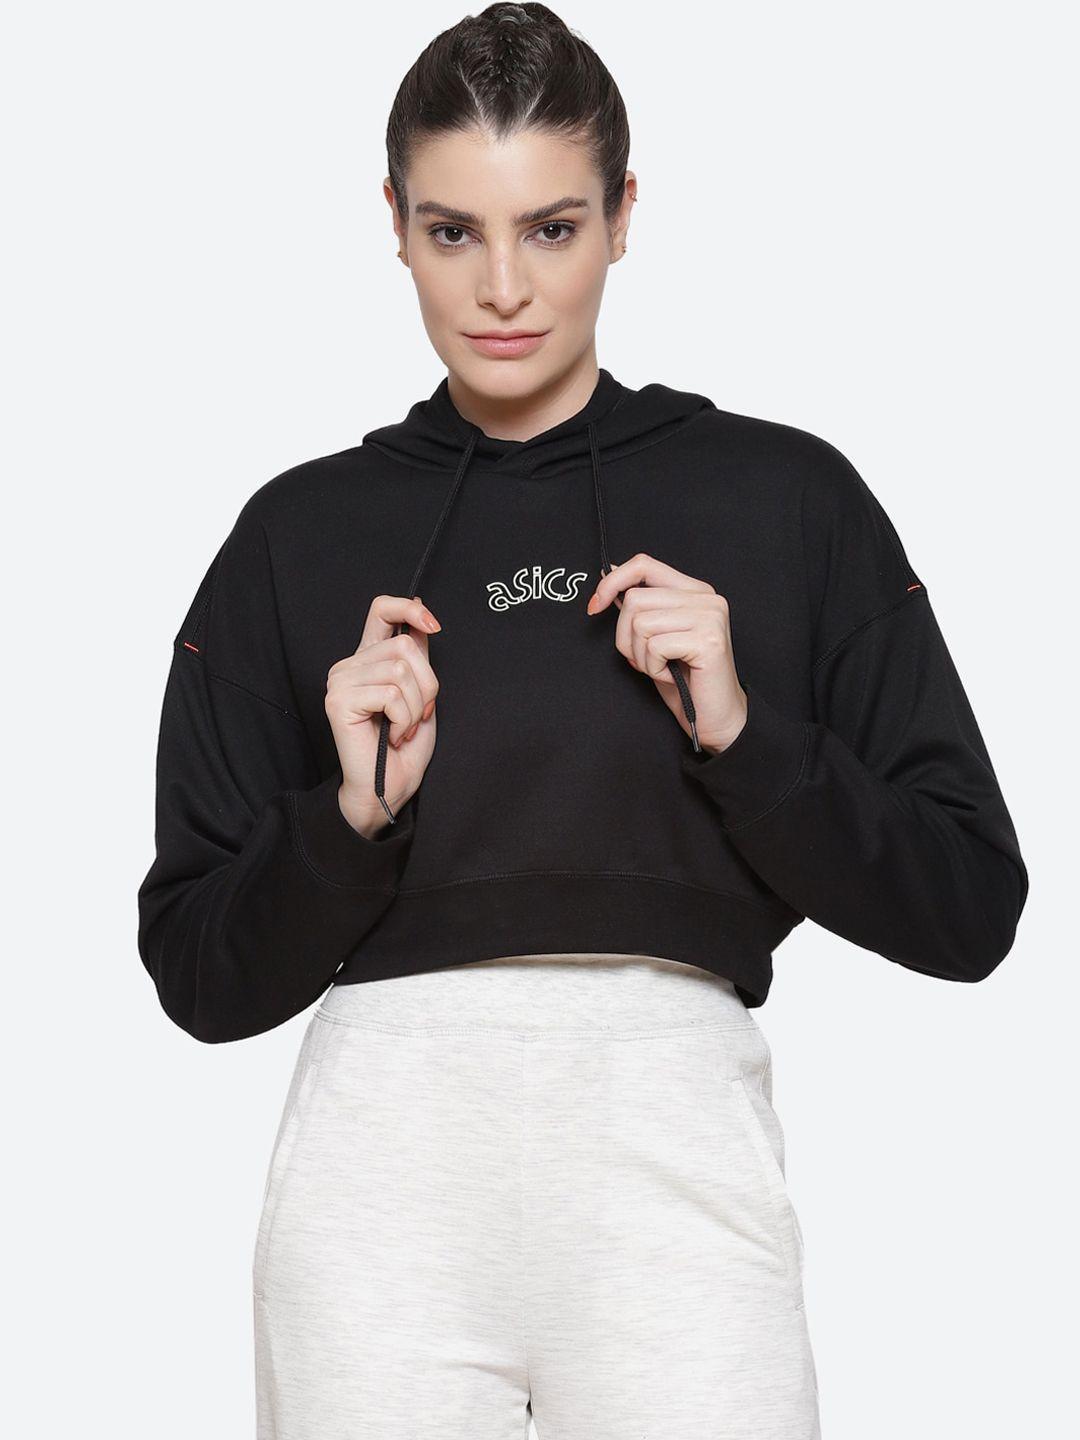 asics women black & white brand logo printed hooded sweatshirt w pullover